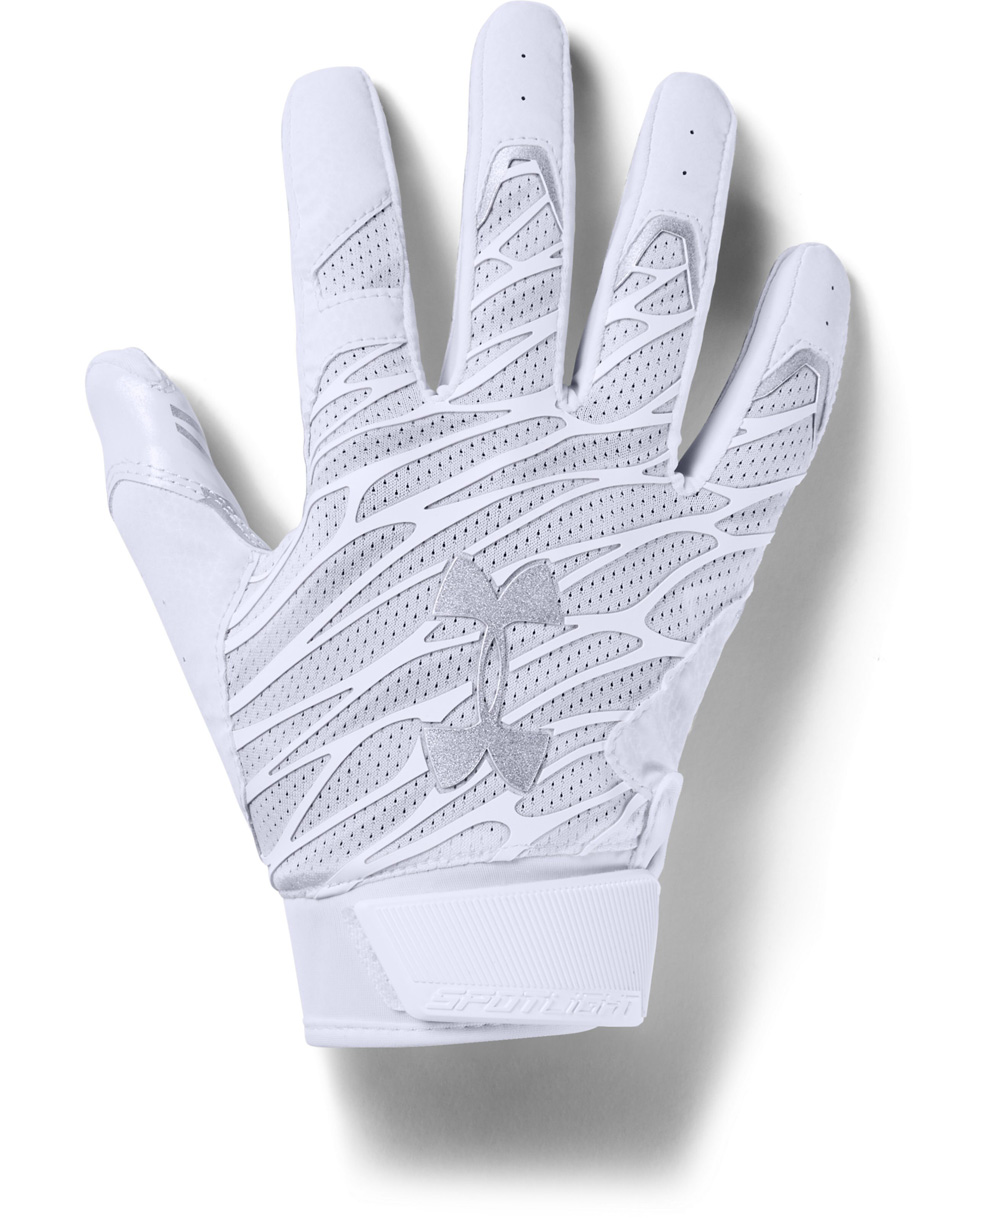 Under Armour Football Gloves Ohio L Large Glue Grip UA Spotlight White 1 pair 